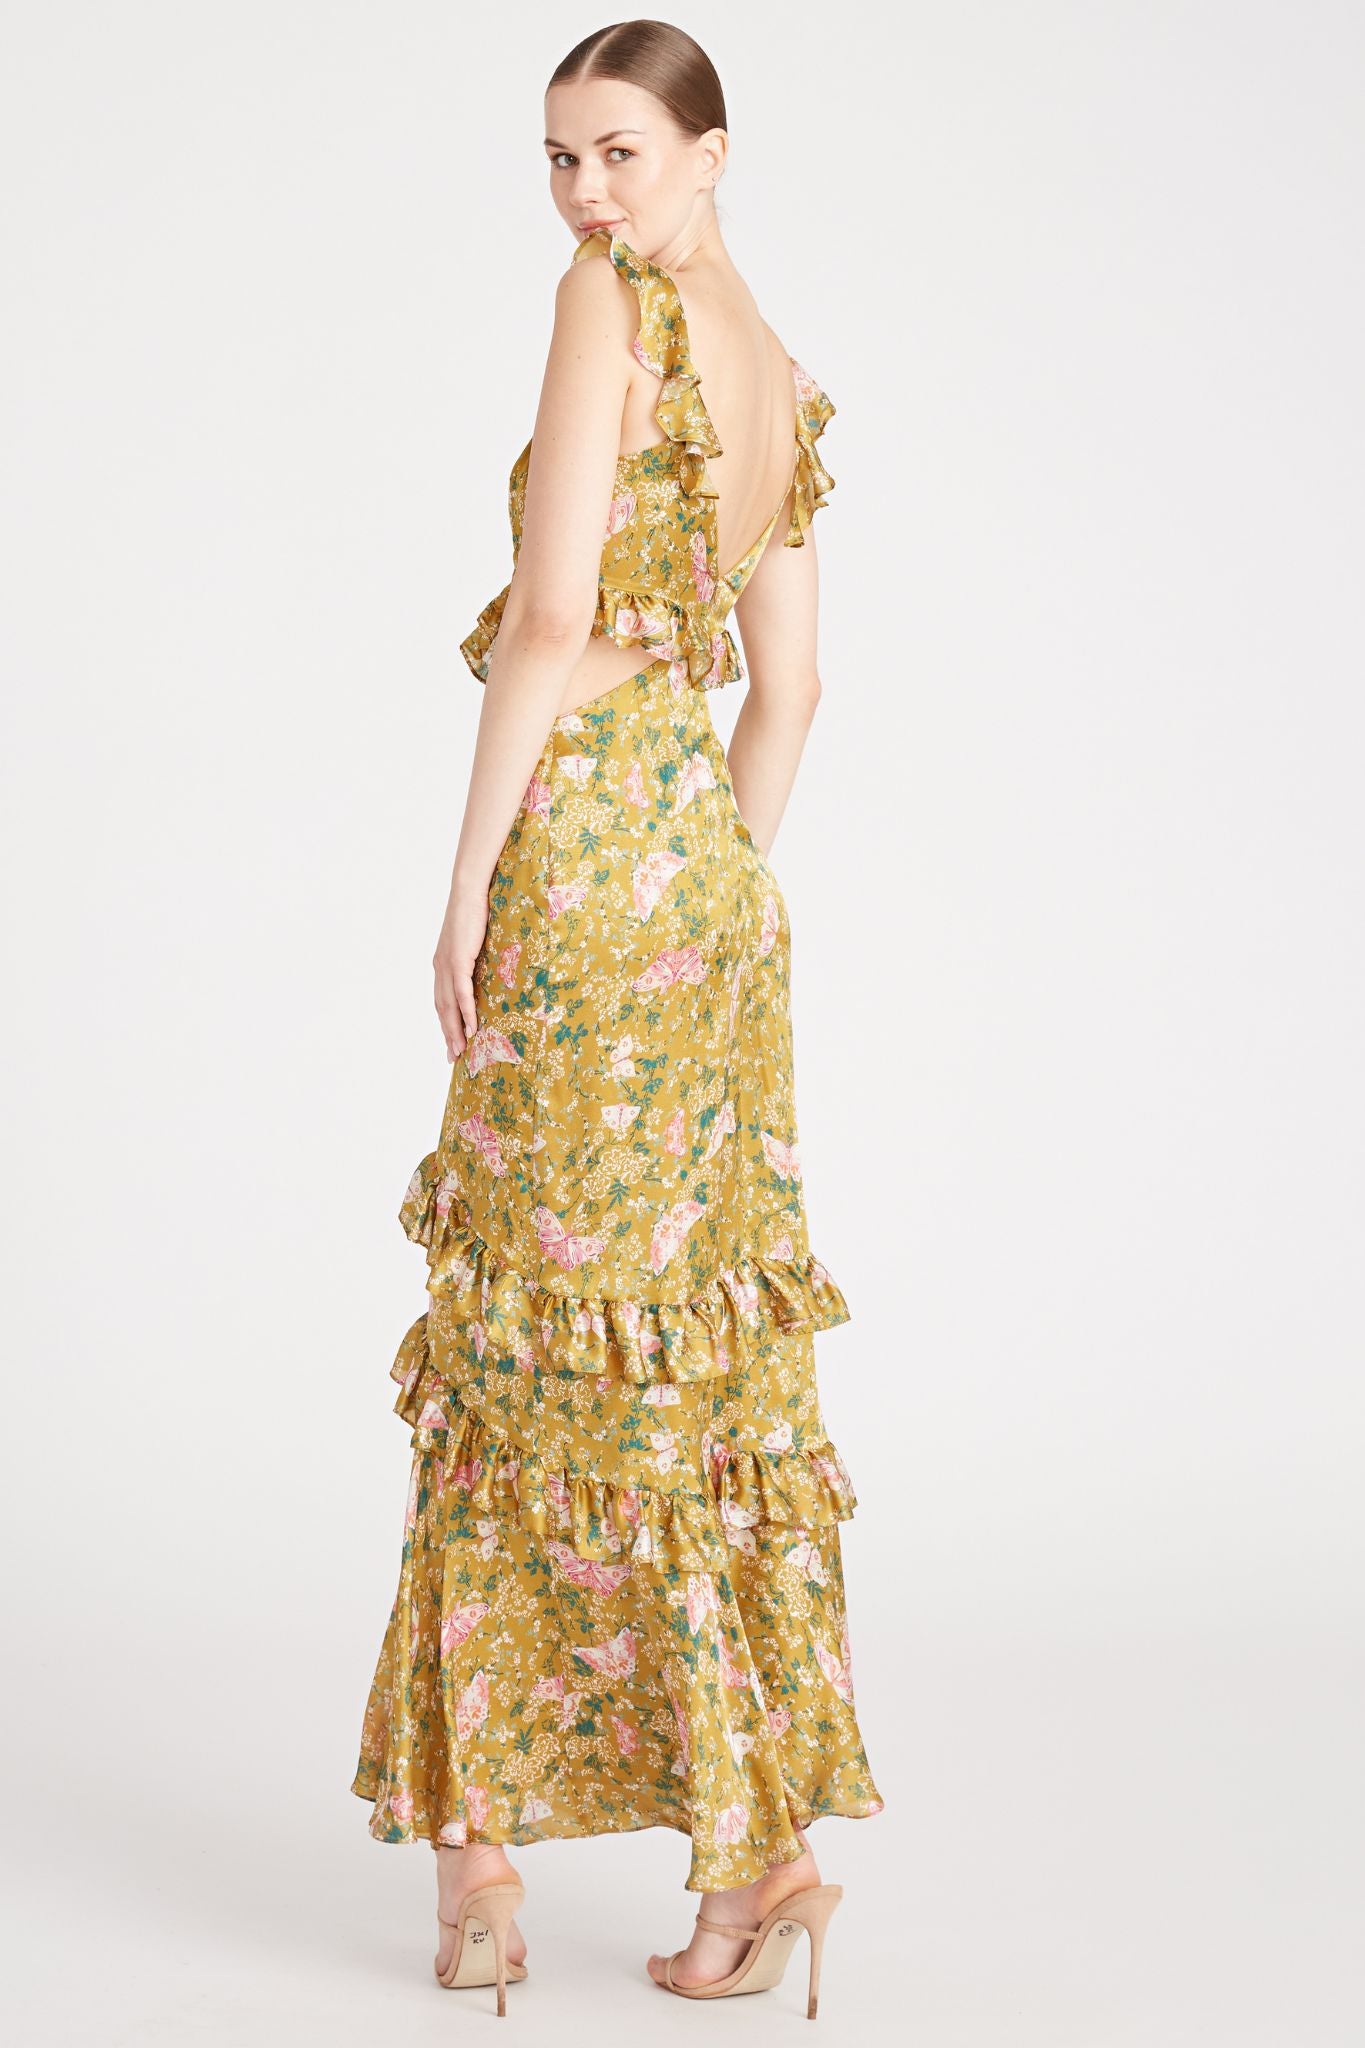 Magnolia Gown by AMUR - RENTAL